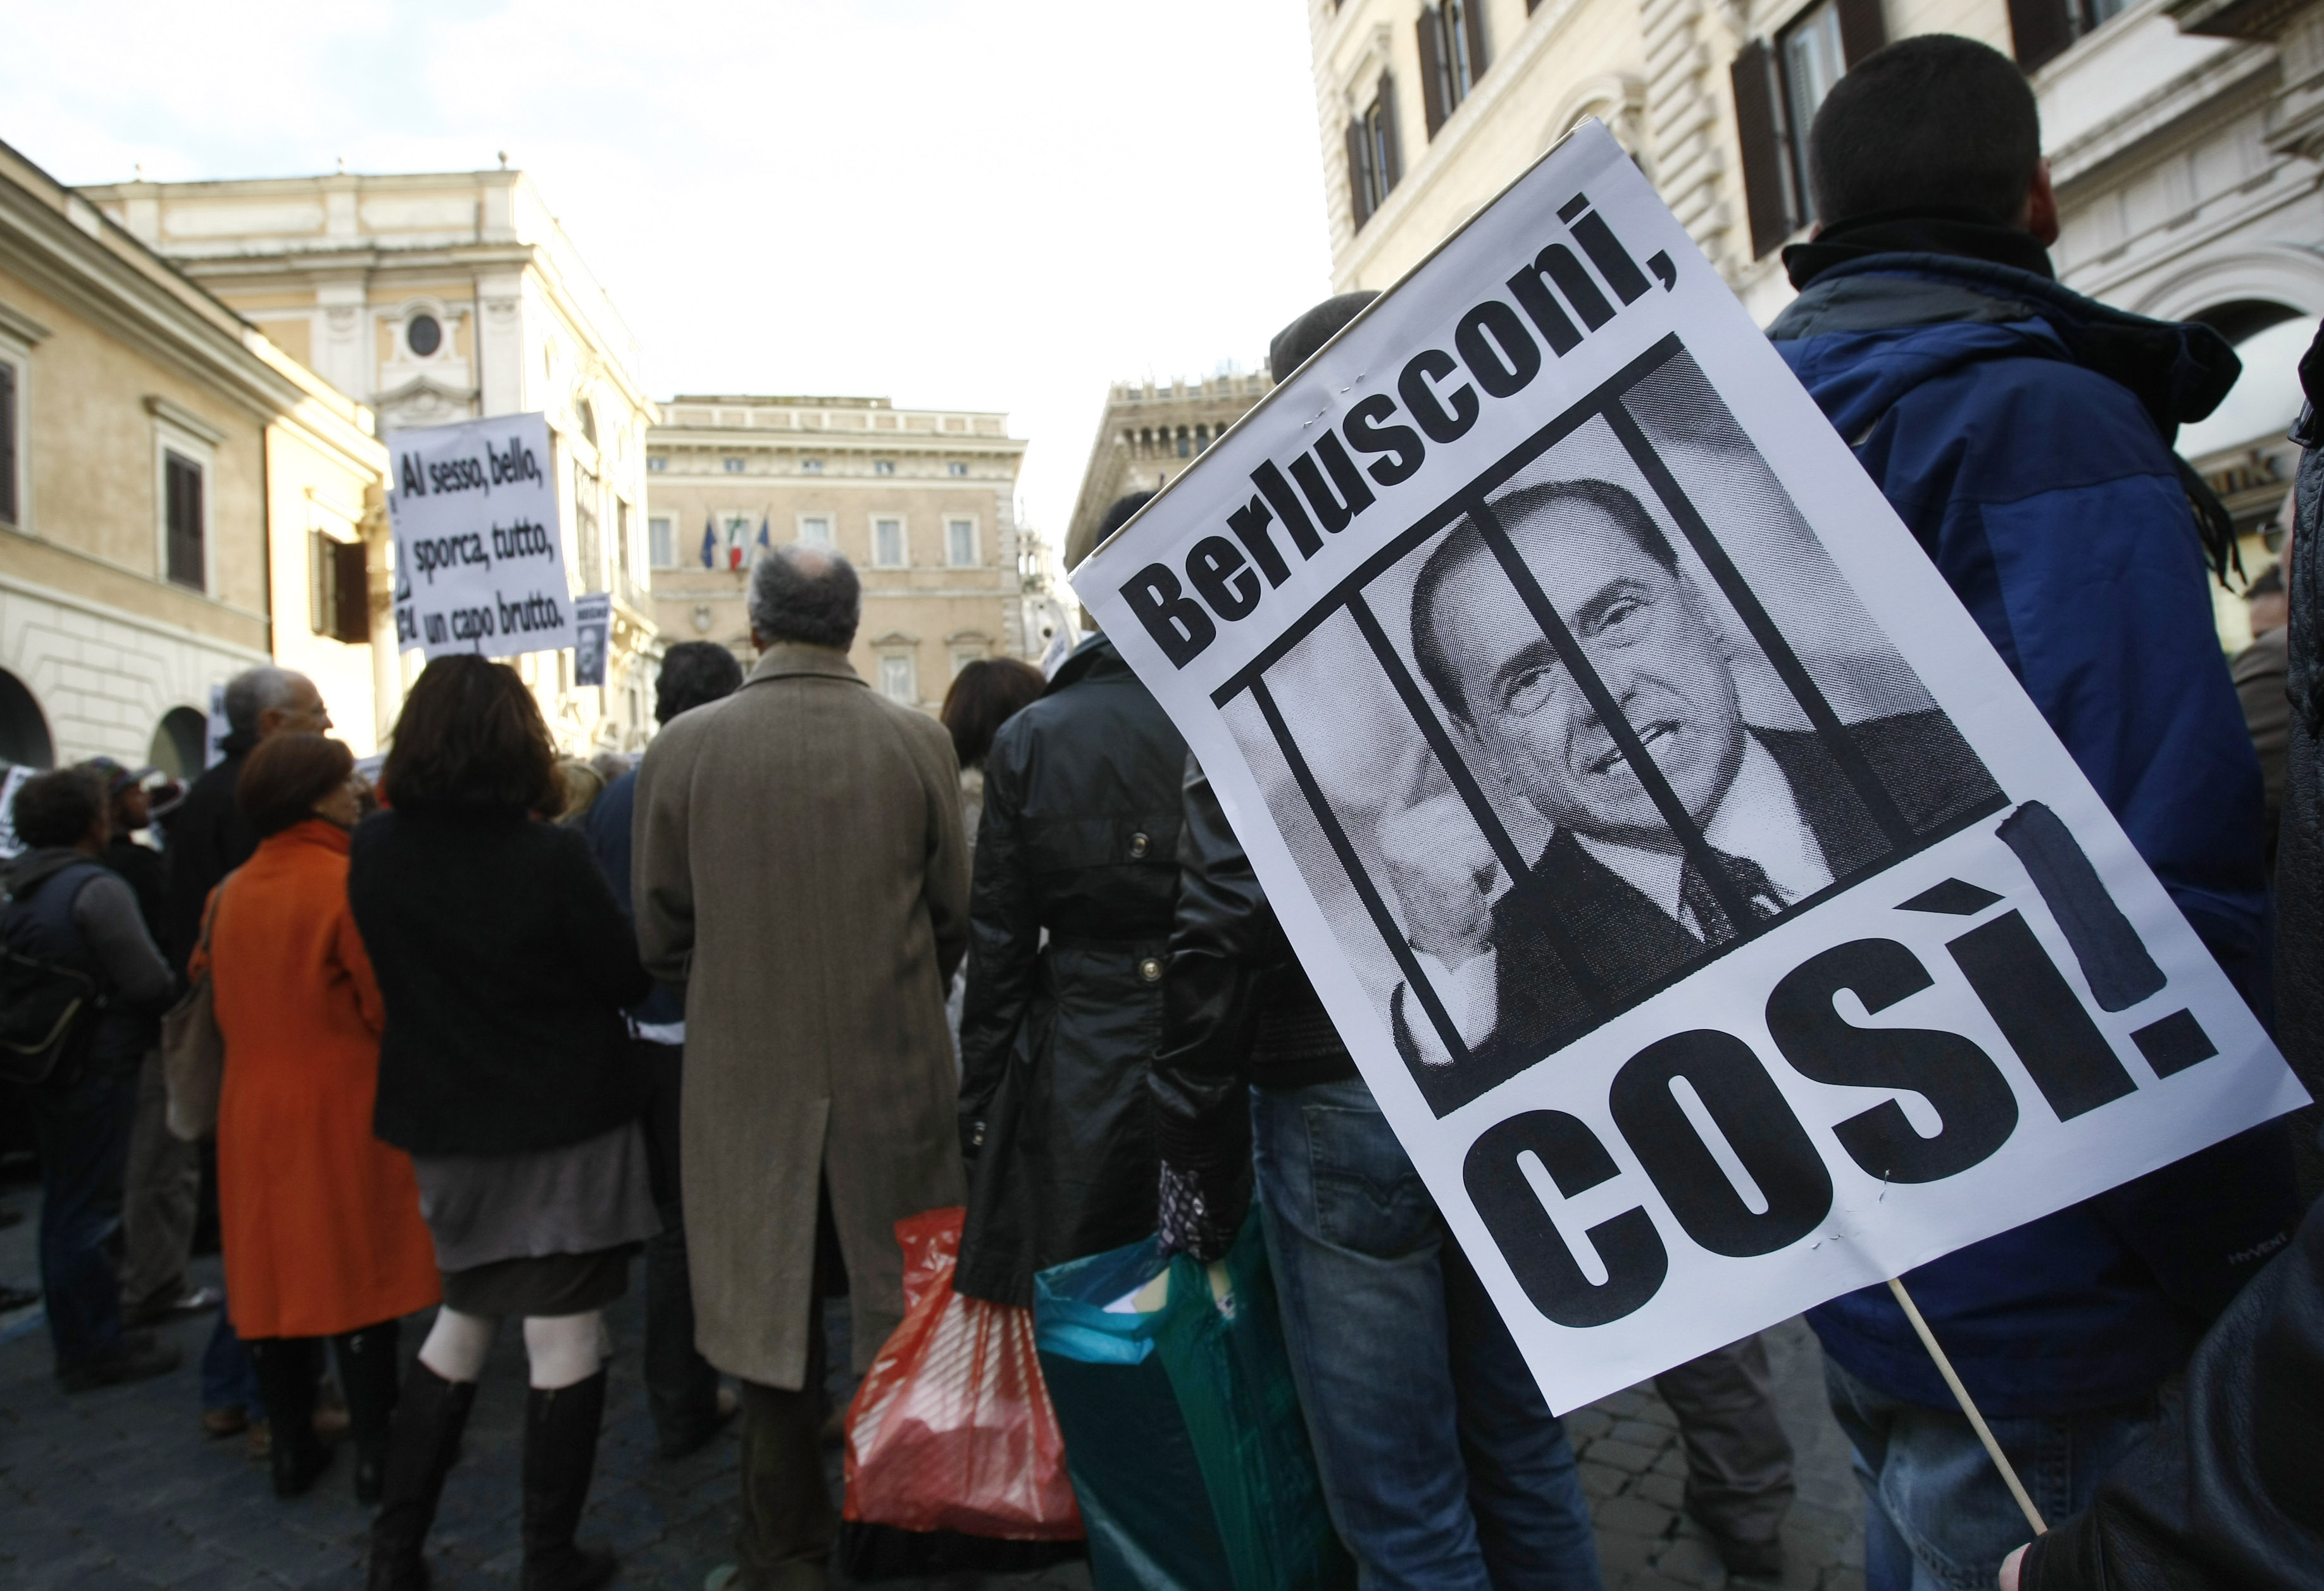 Silvio Berlusconi, Prostitution, Sexskandal, Berlusconi, Italien, Köp av sexuell tjänst